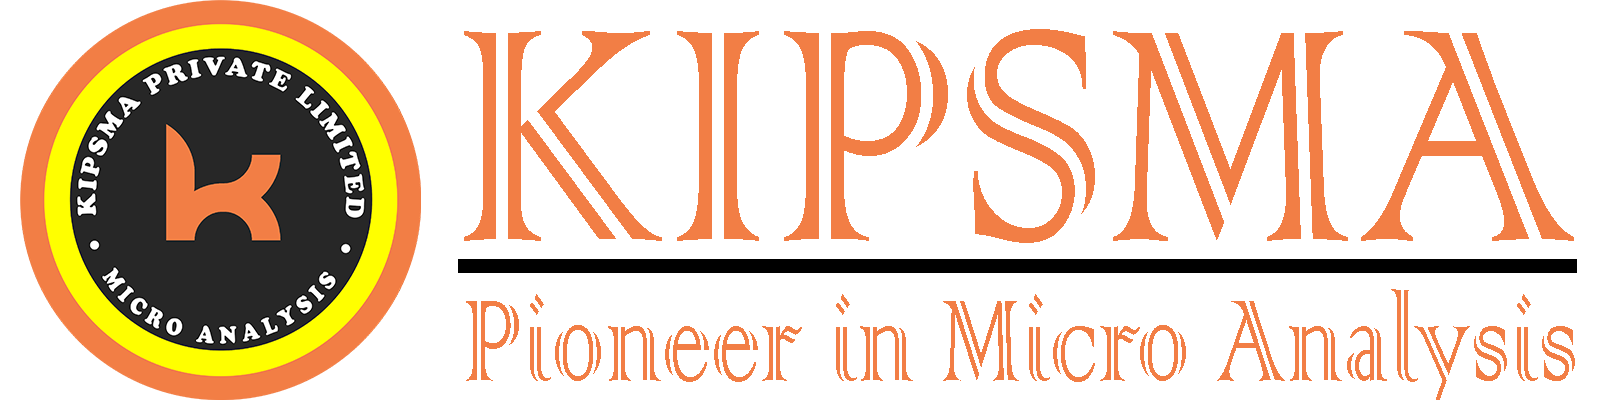 KIPSMA | Metallurgy Image Analysis Software For Microscope & Metallographic Image Analysis